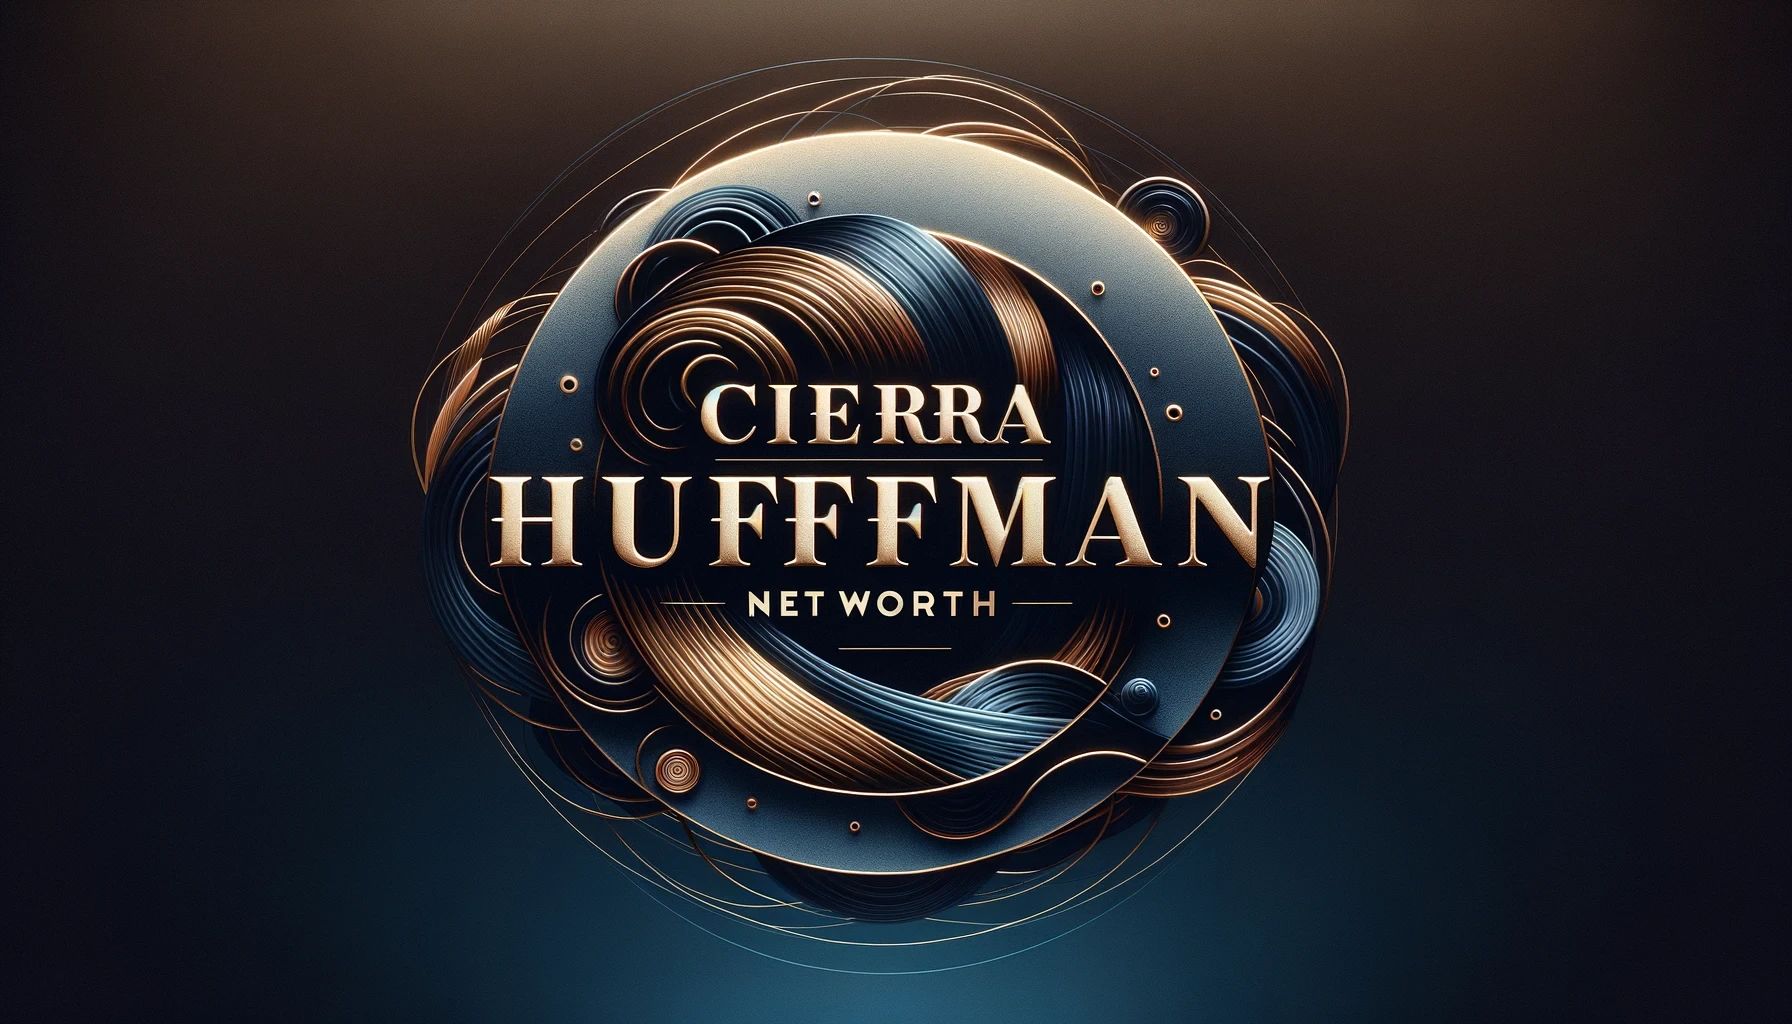 Cierra Huffman Net worth